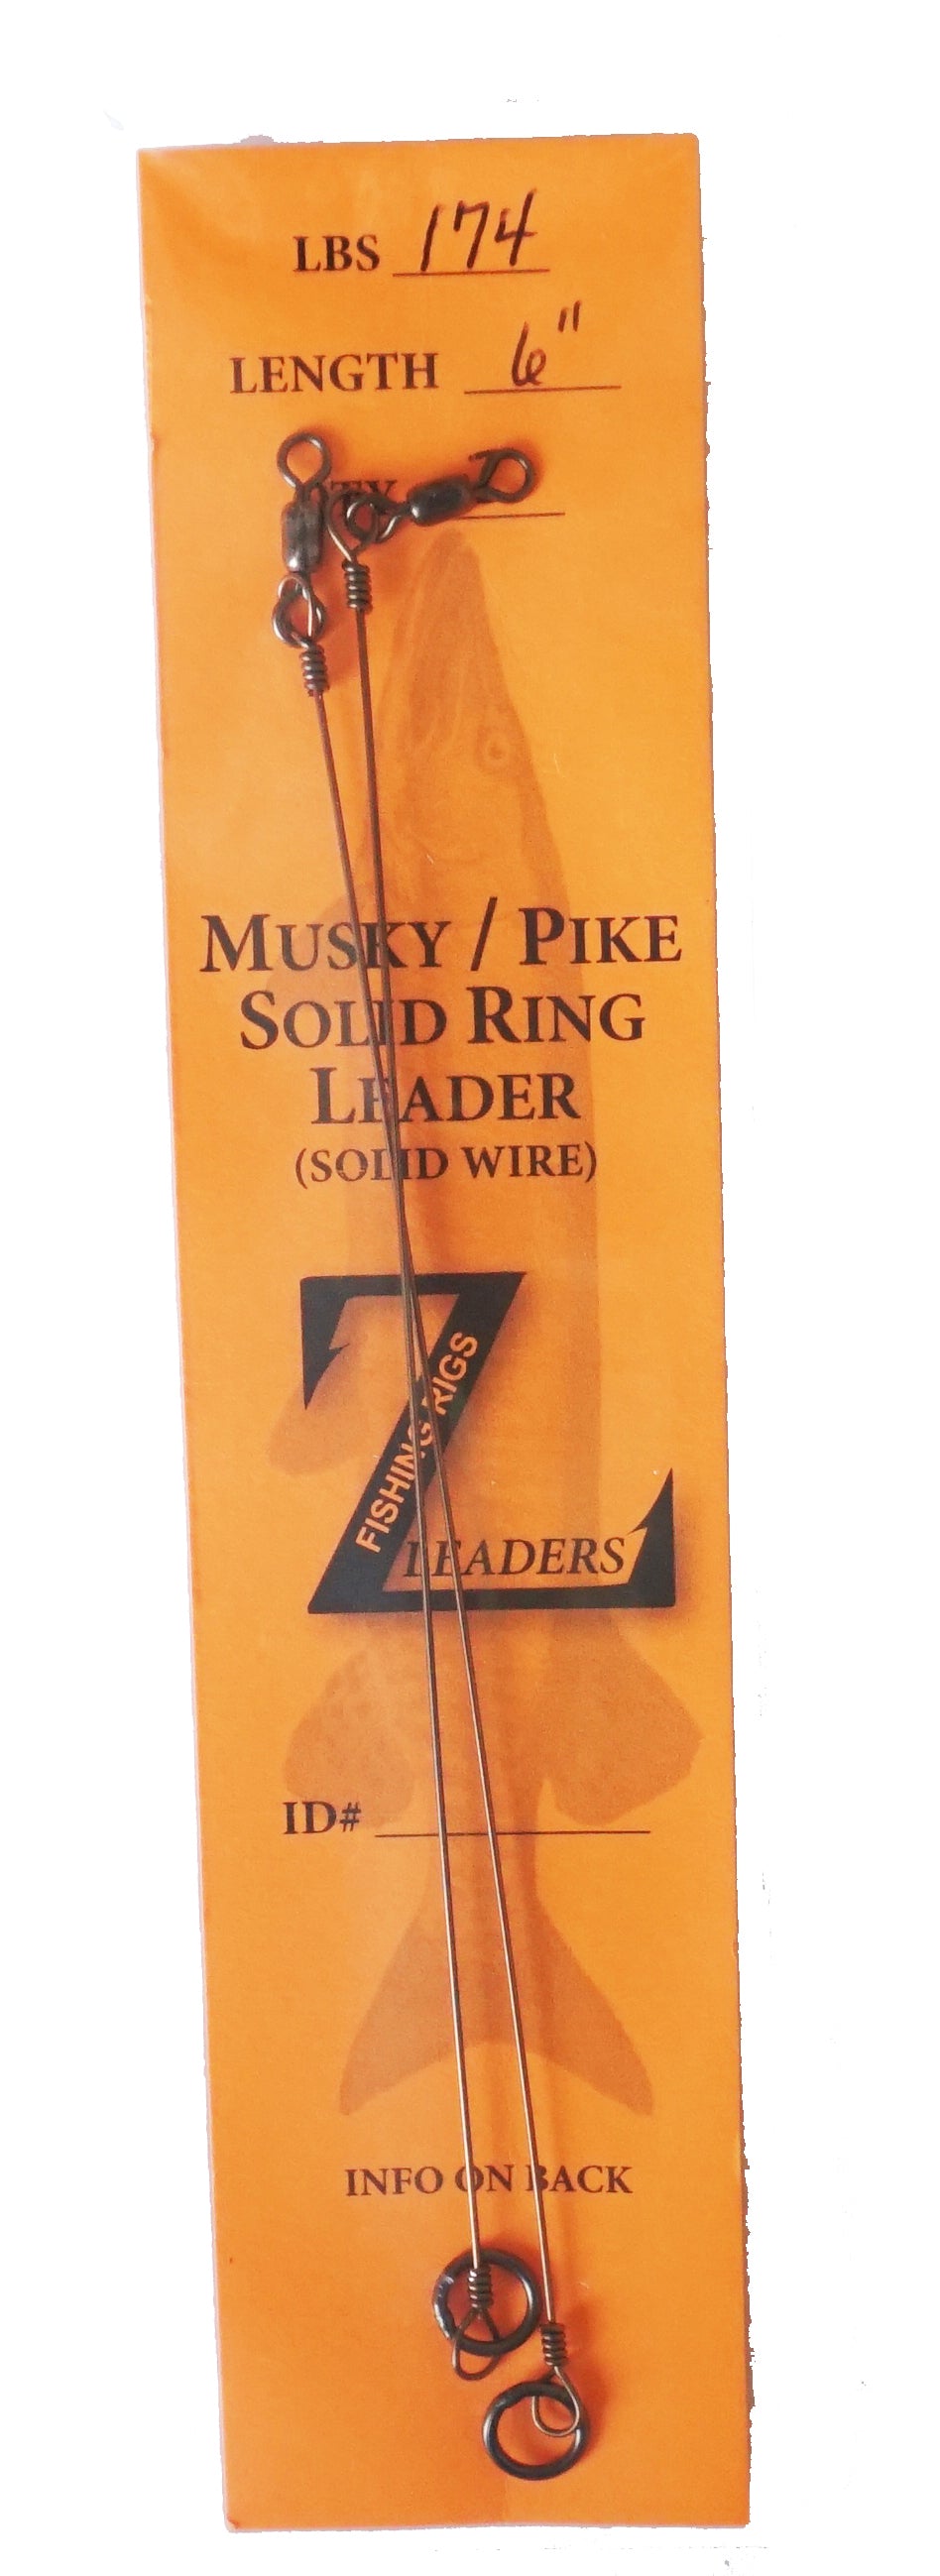 Z Leaders Solid Wire Musky Pike Leaders